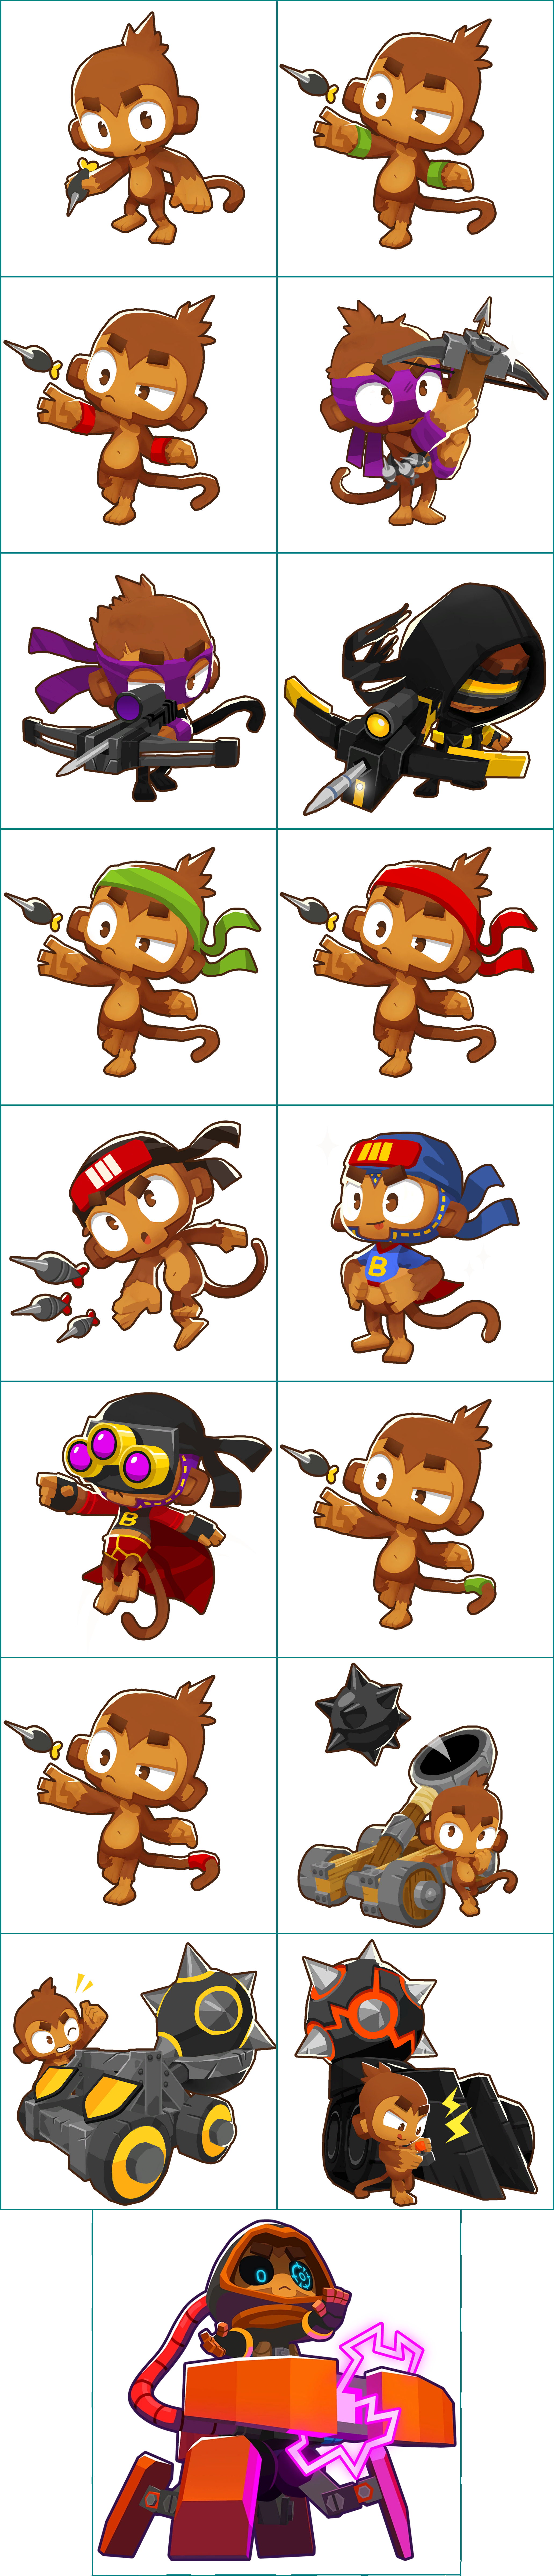 Bloons Tower Defense 6 - Dart Monkey